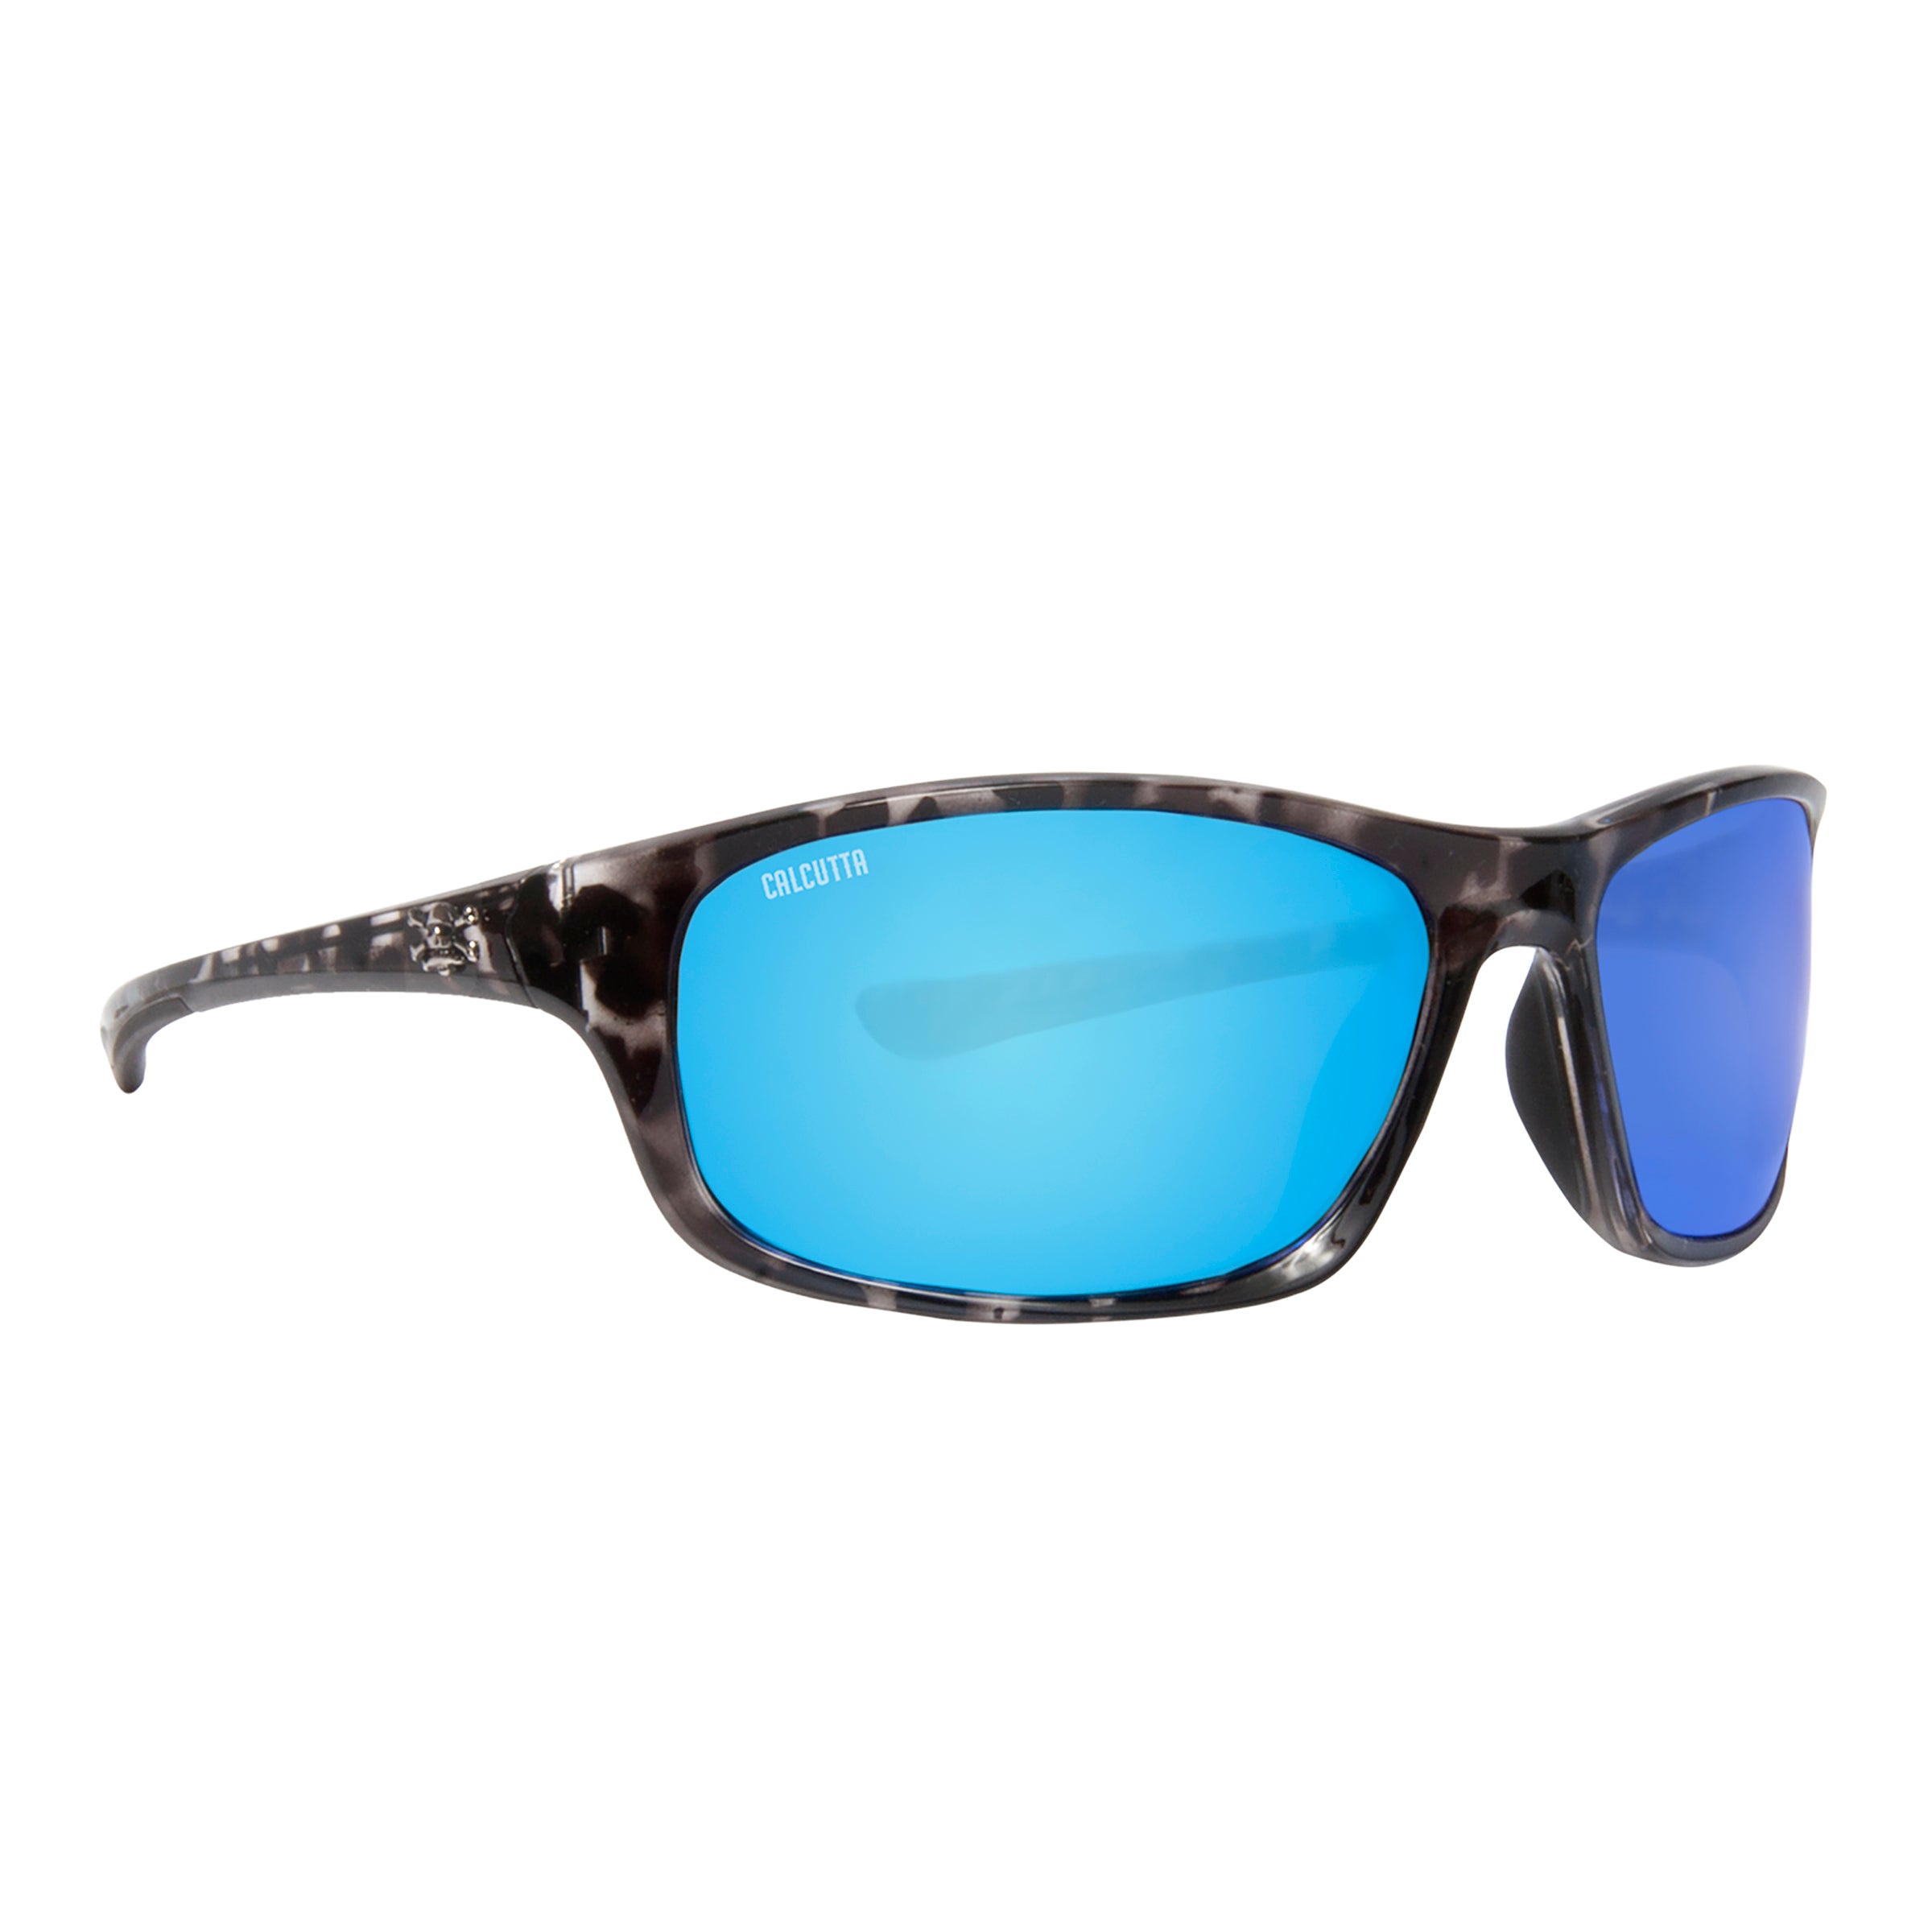 Fishing Sunglasses | Polarized Lenses | Calcutta Outdoors Shiny Tortoise/Blue Mirror